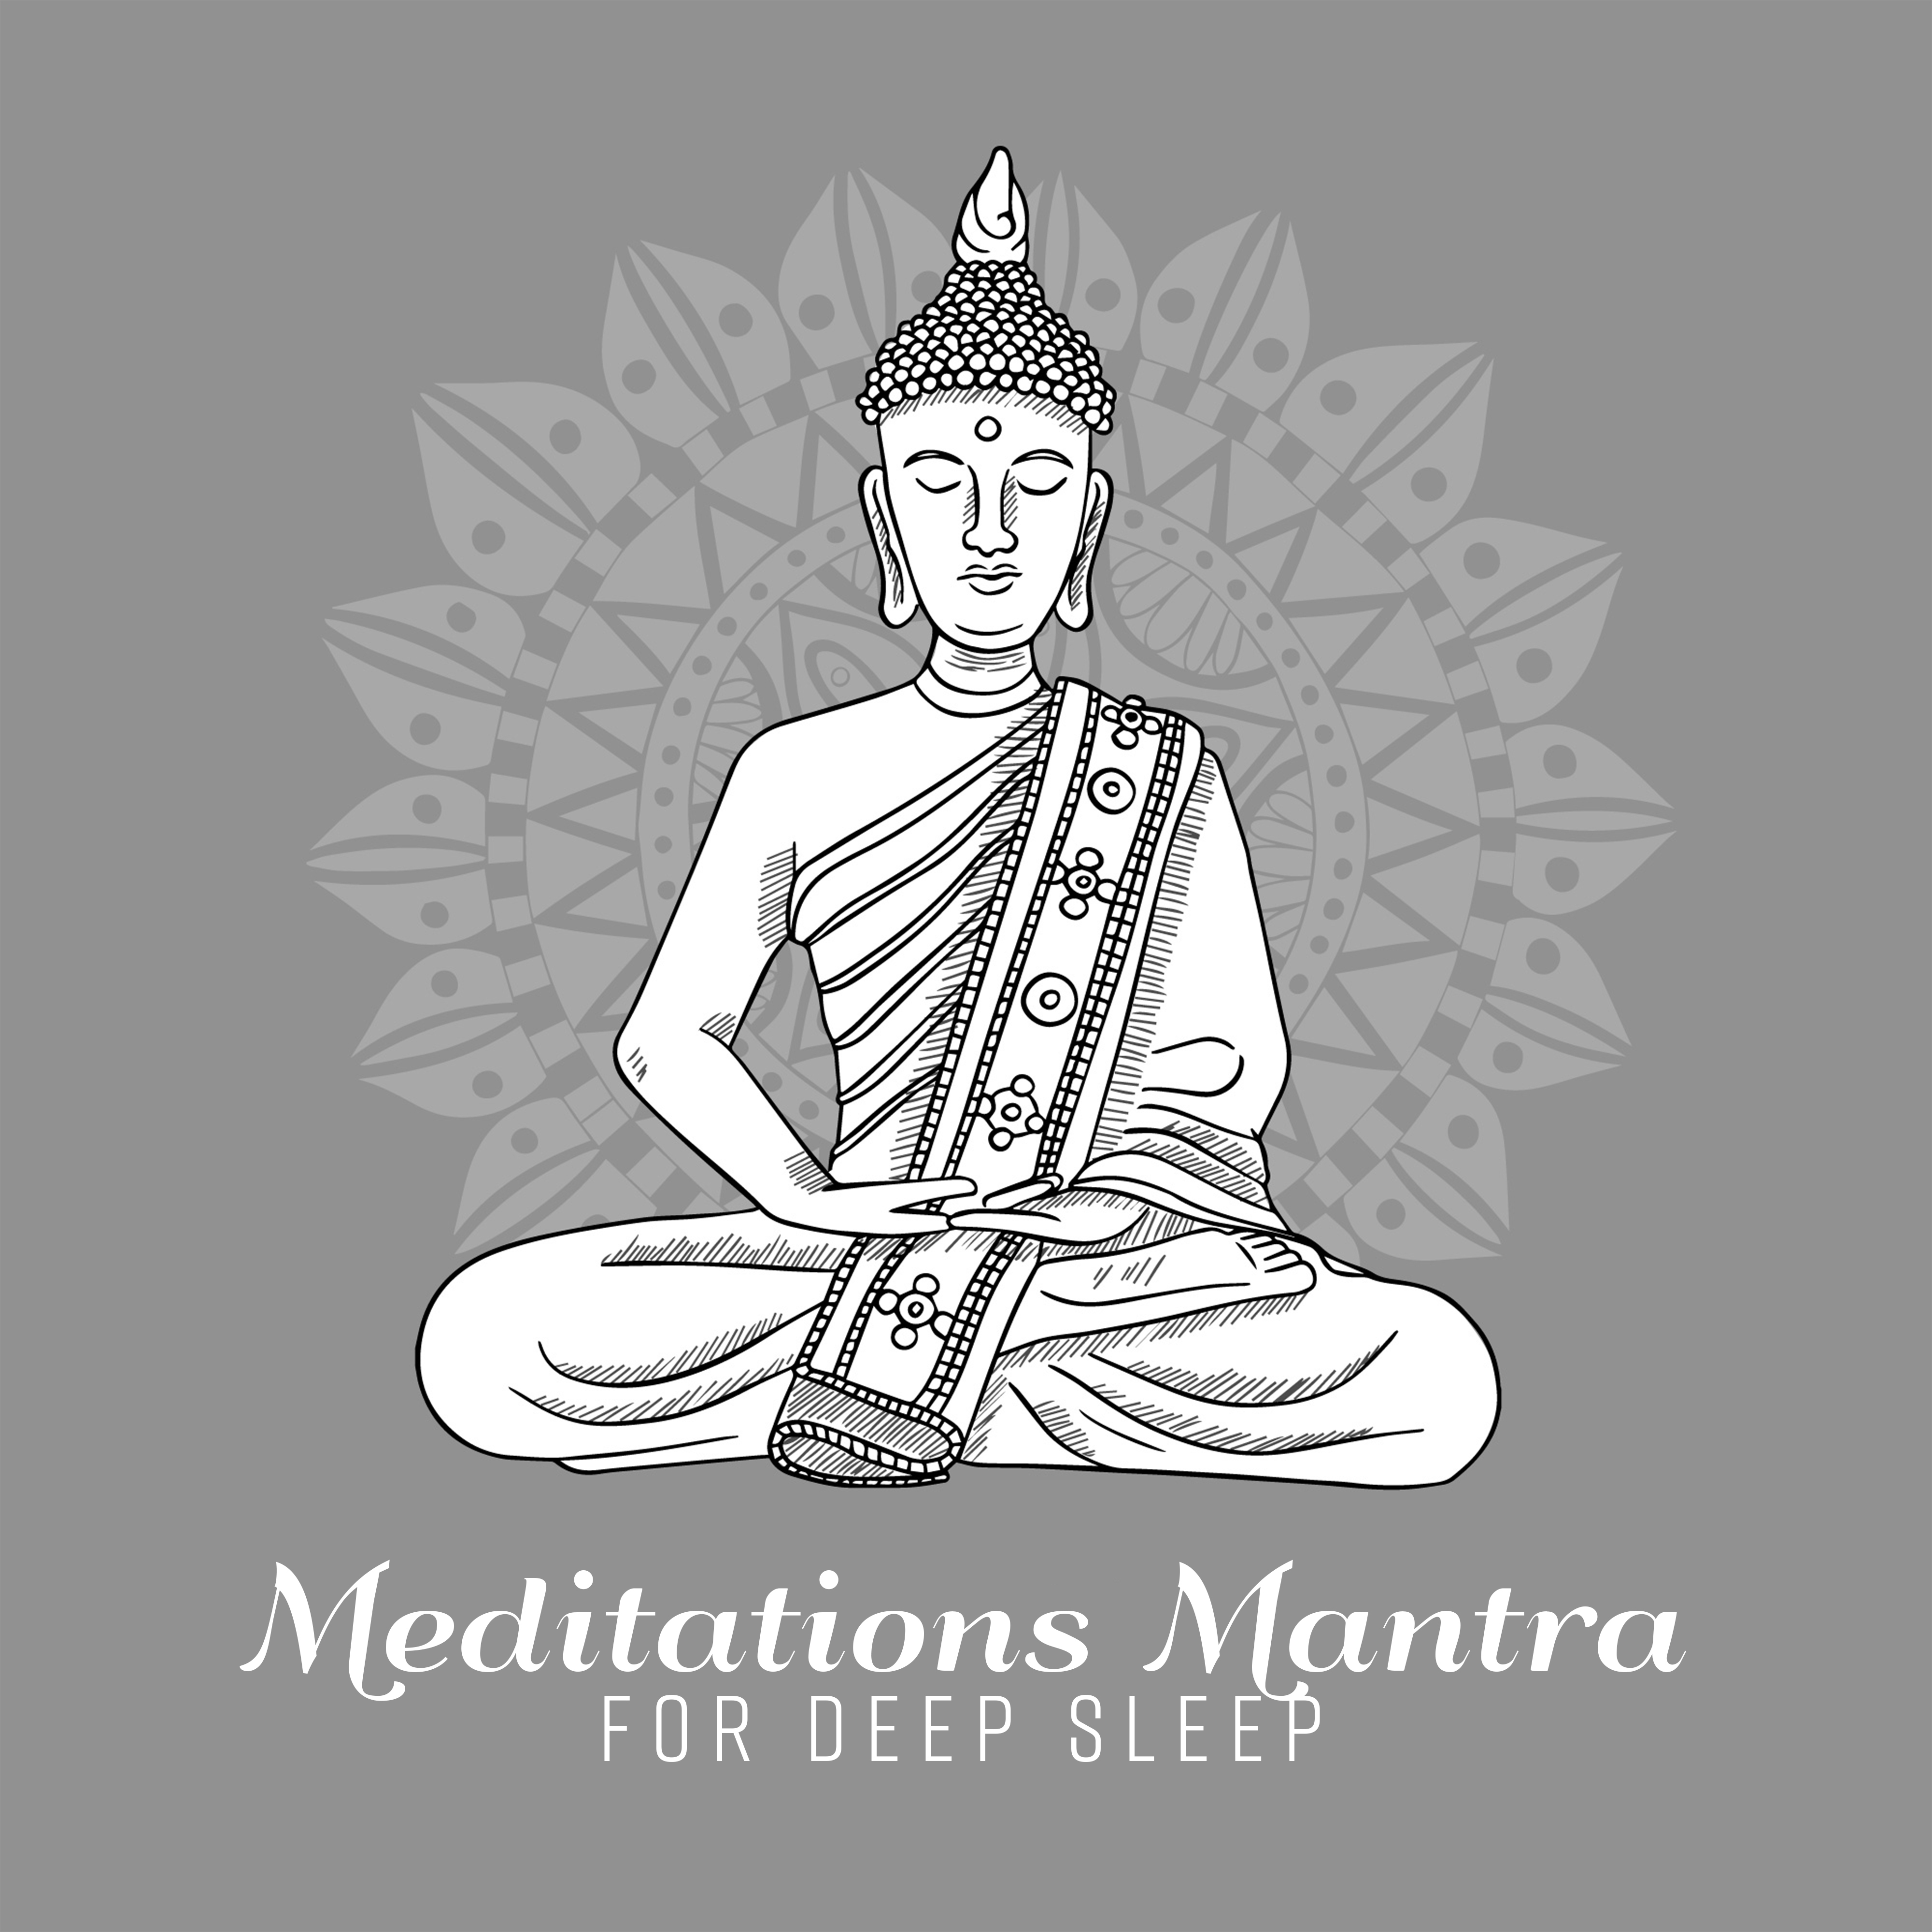 Meditations Mantra for Deep Sleep